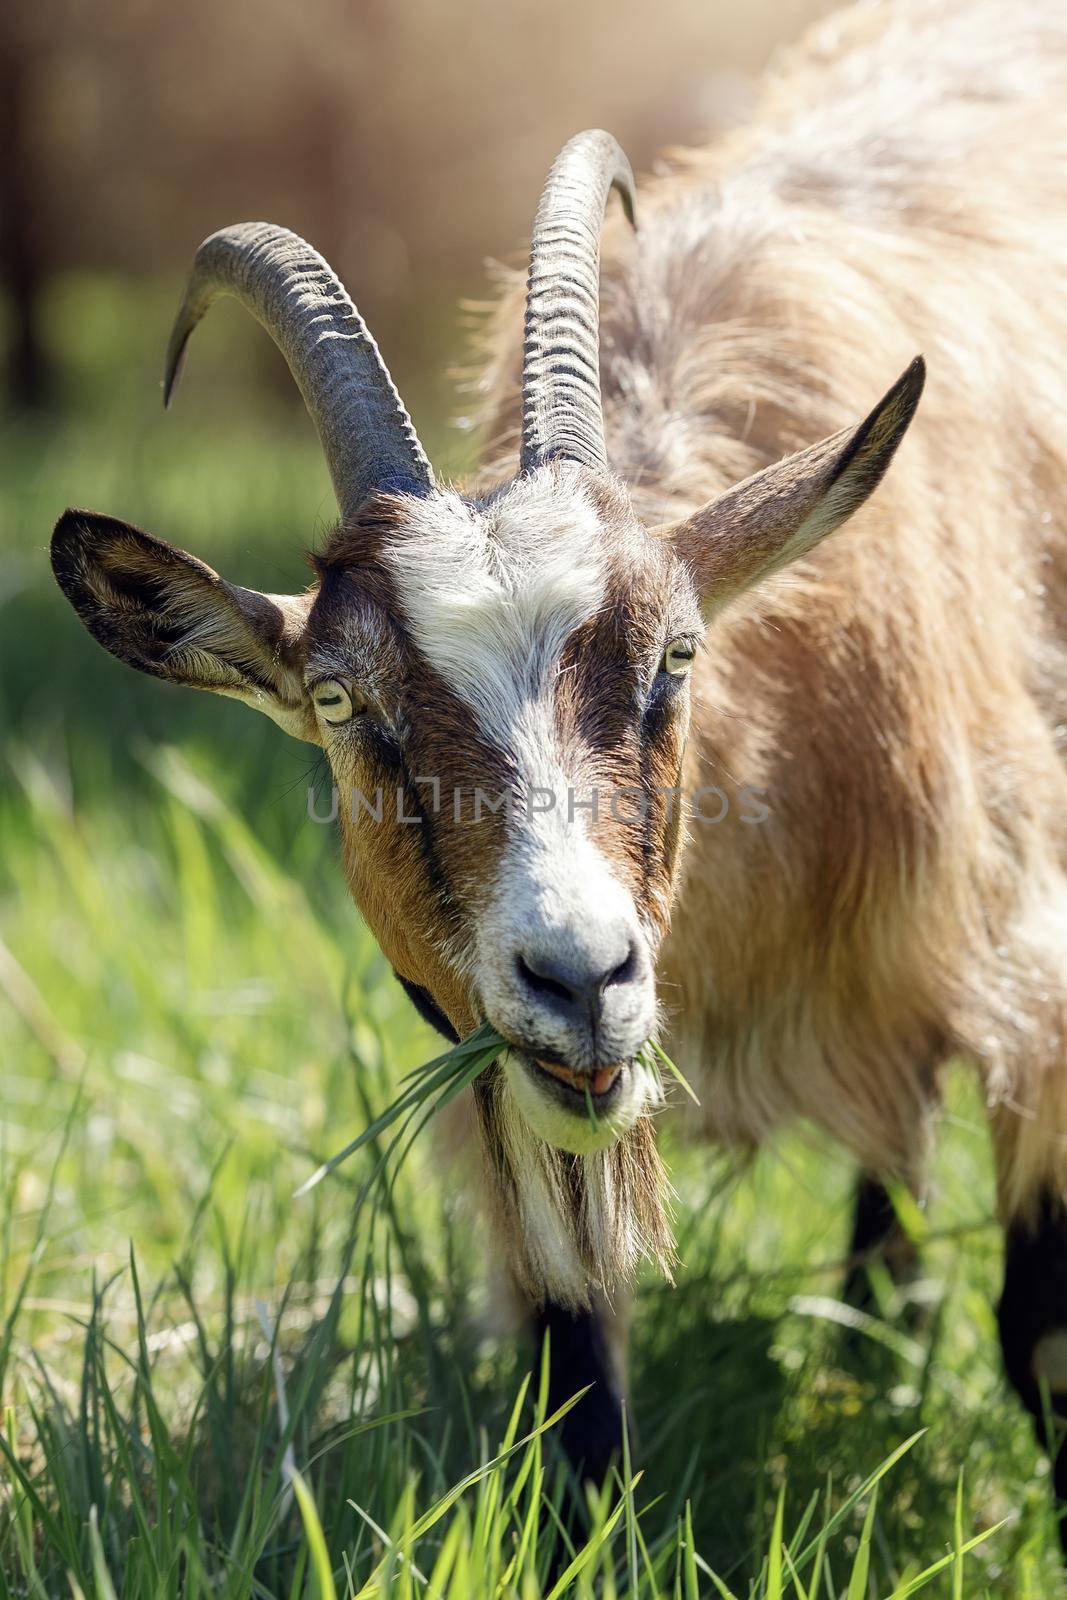 Brown horny goat eating lush green grass grass in midsummer by Lincikas